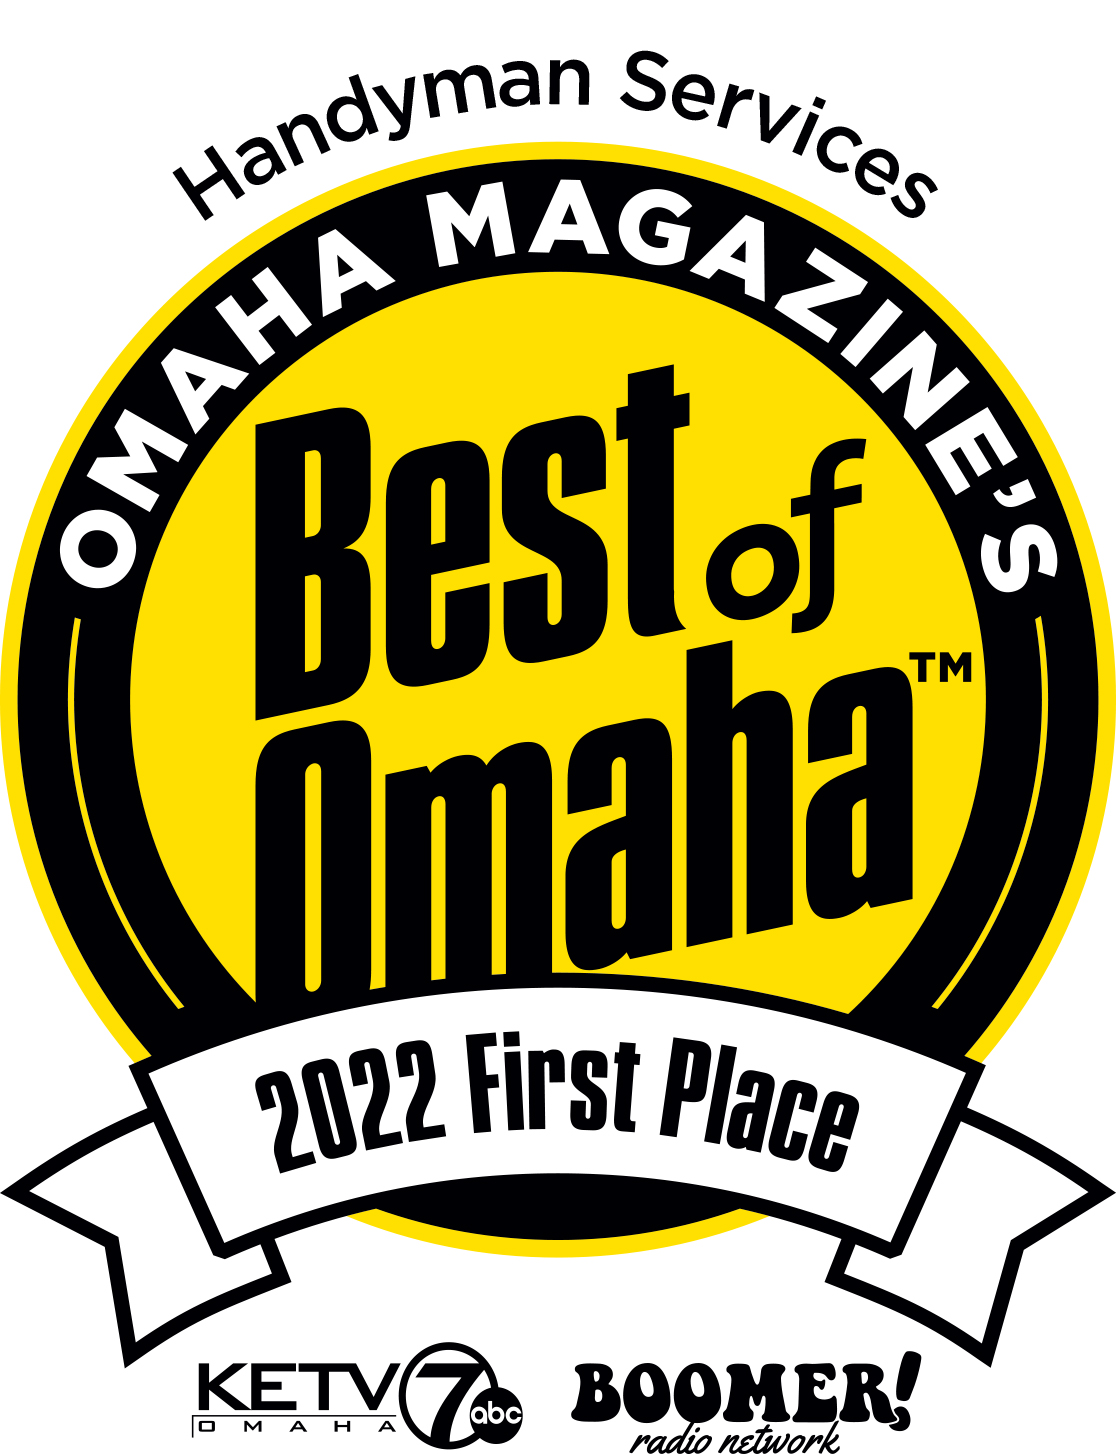 Omaha Handyman Service